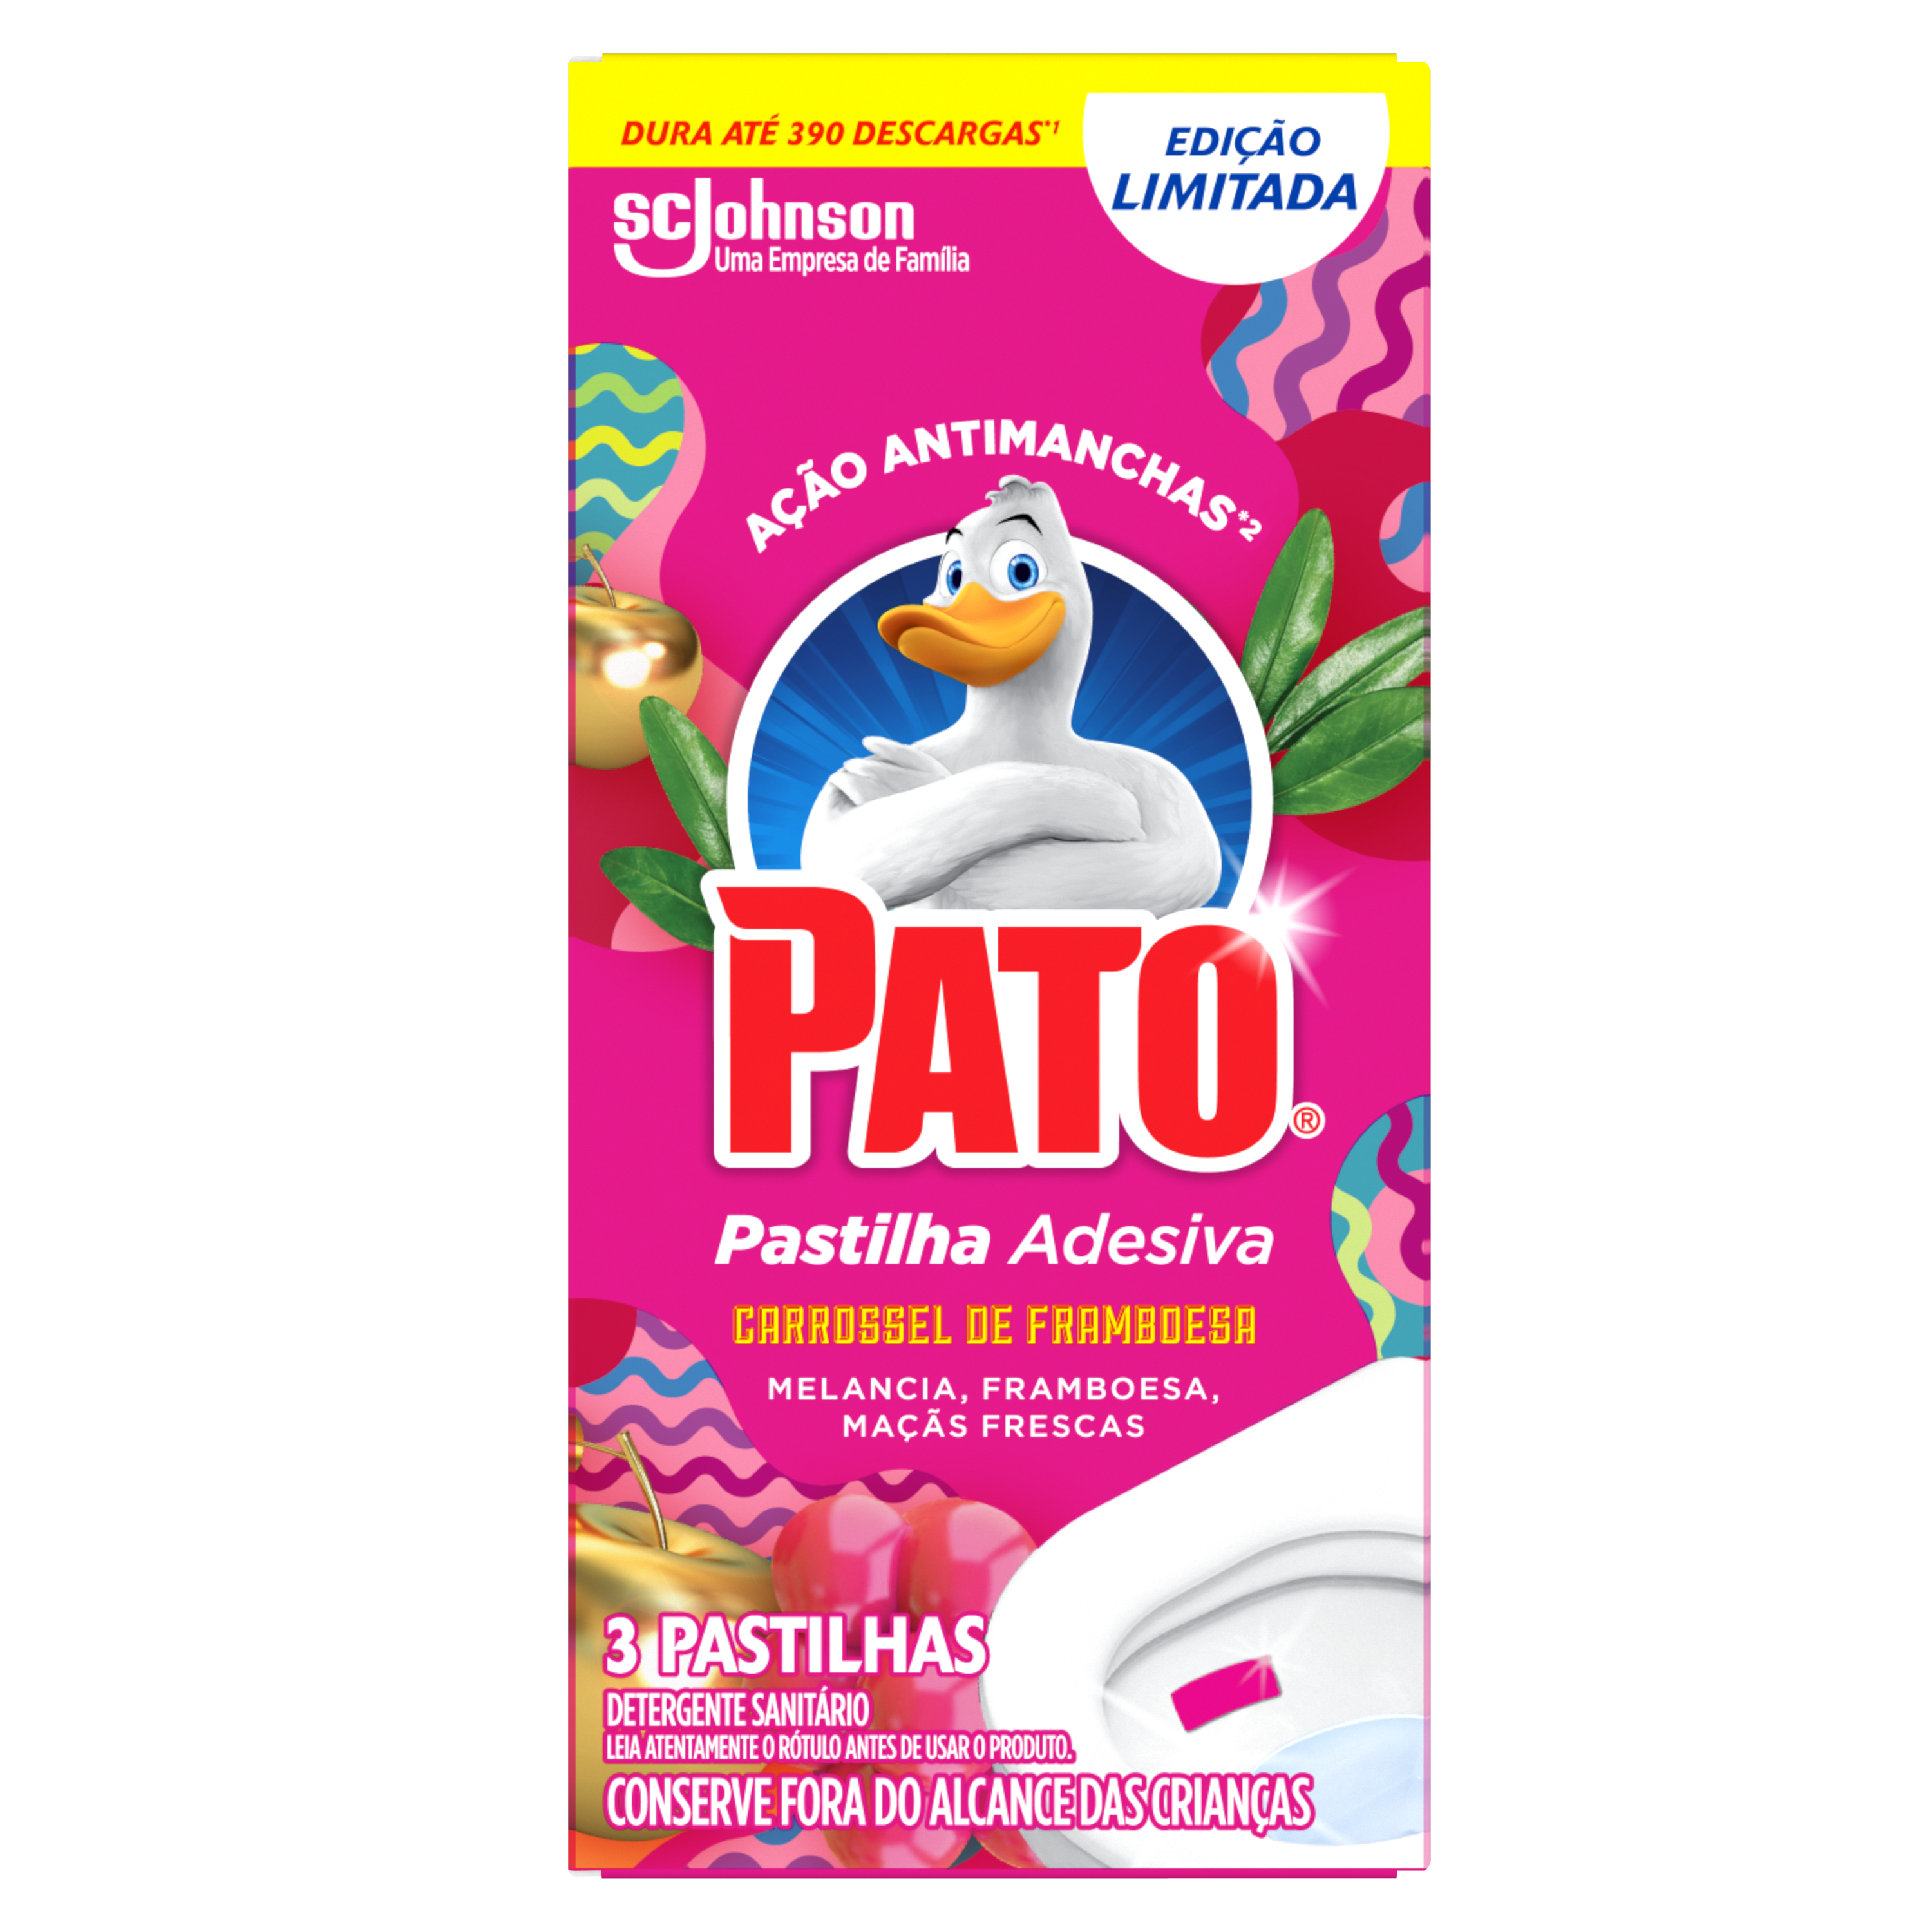 Pato® Pastilha Adesiva Carrossel